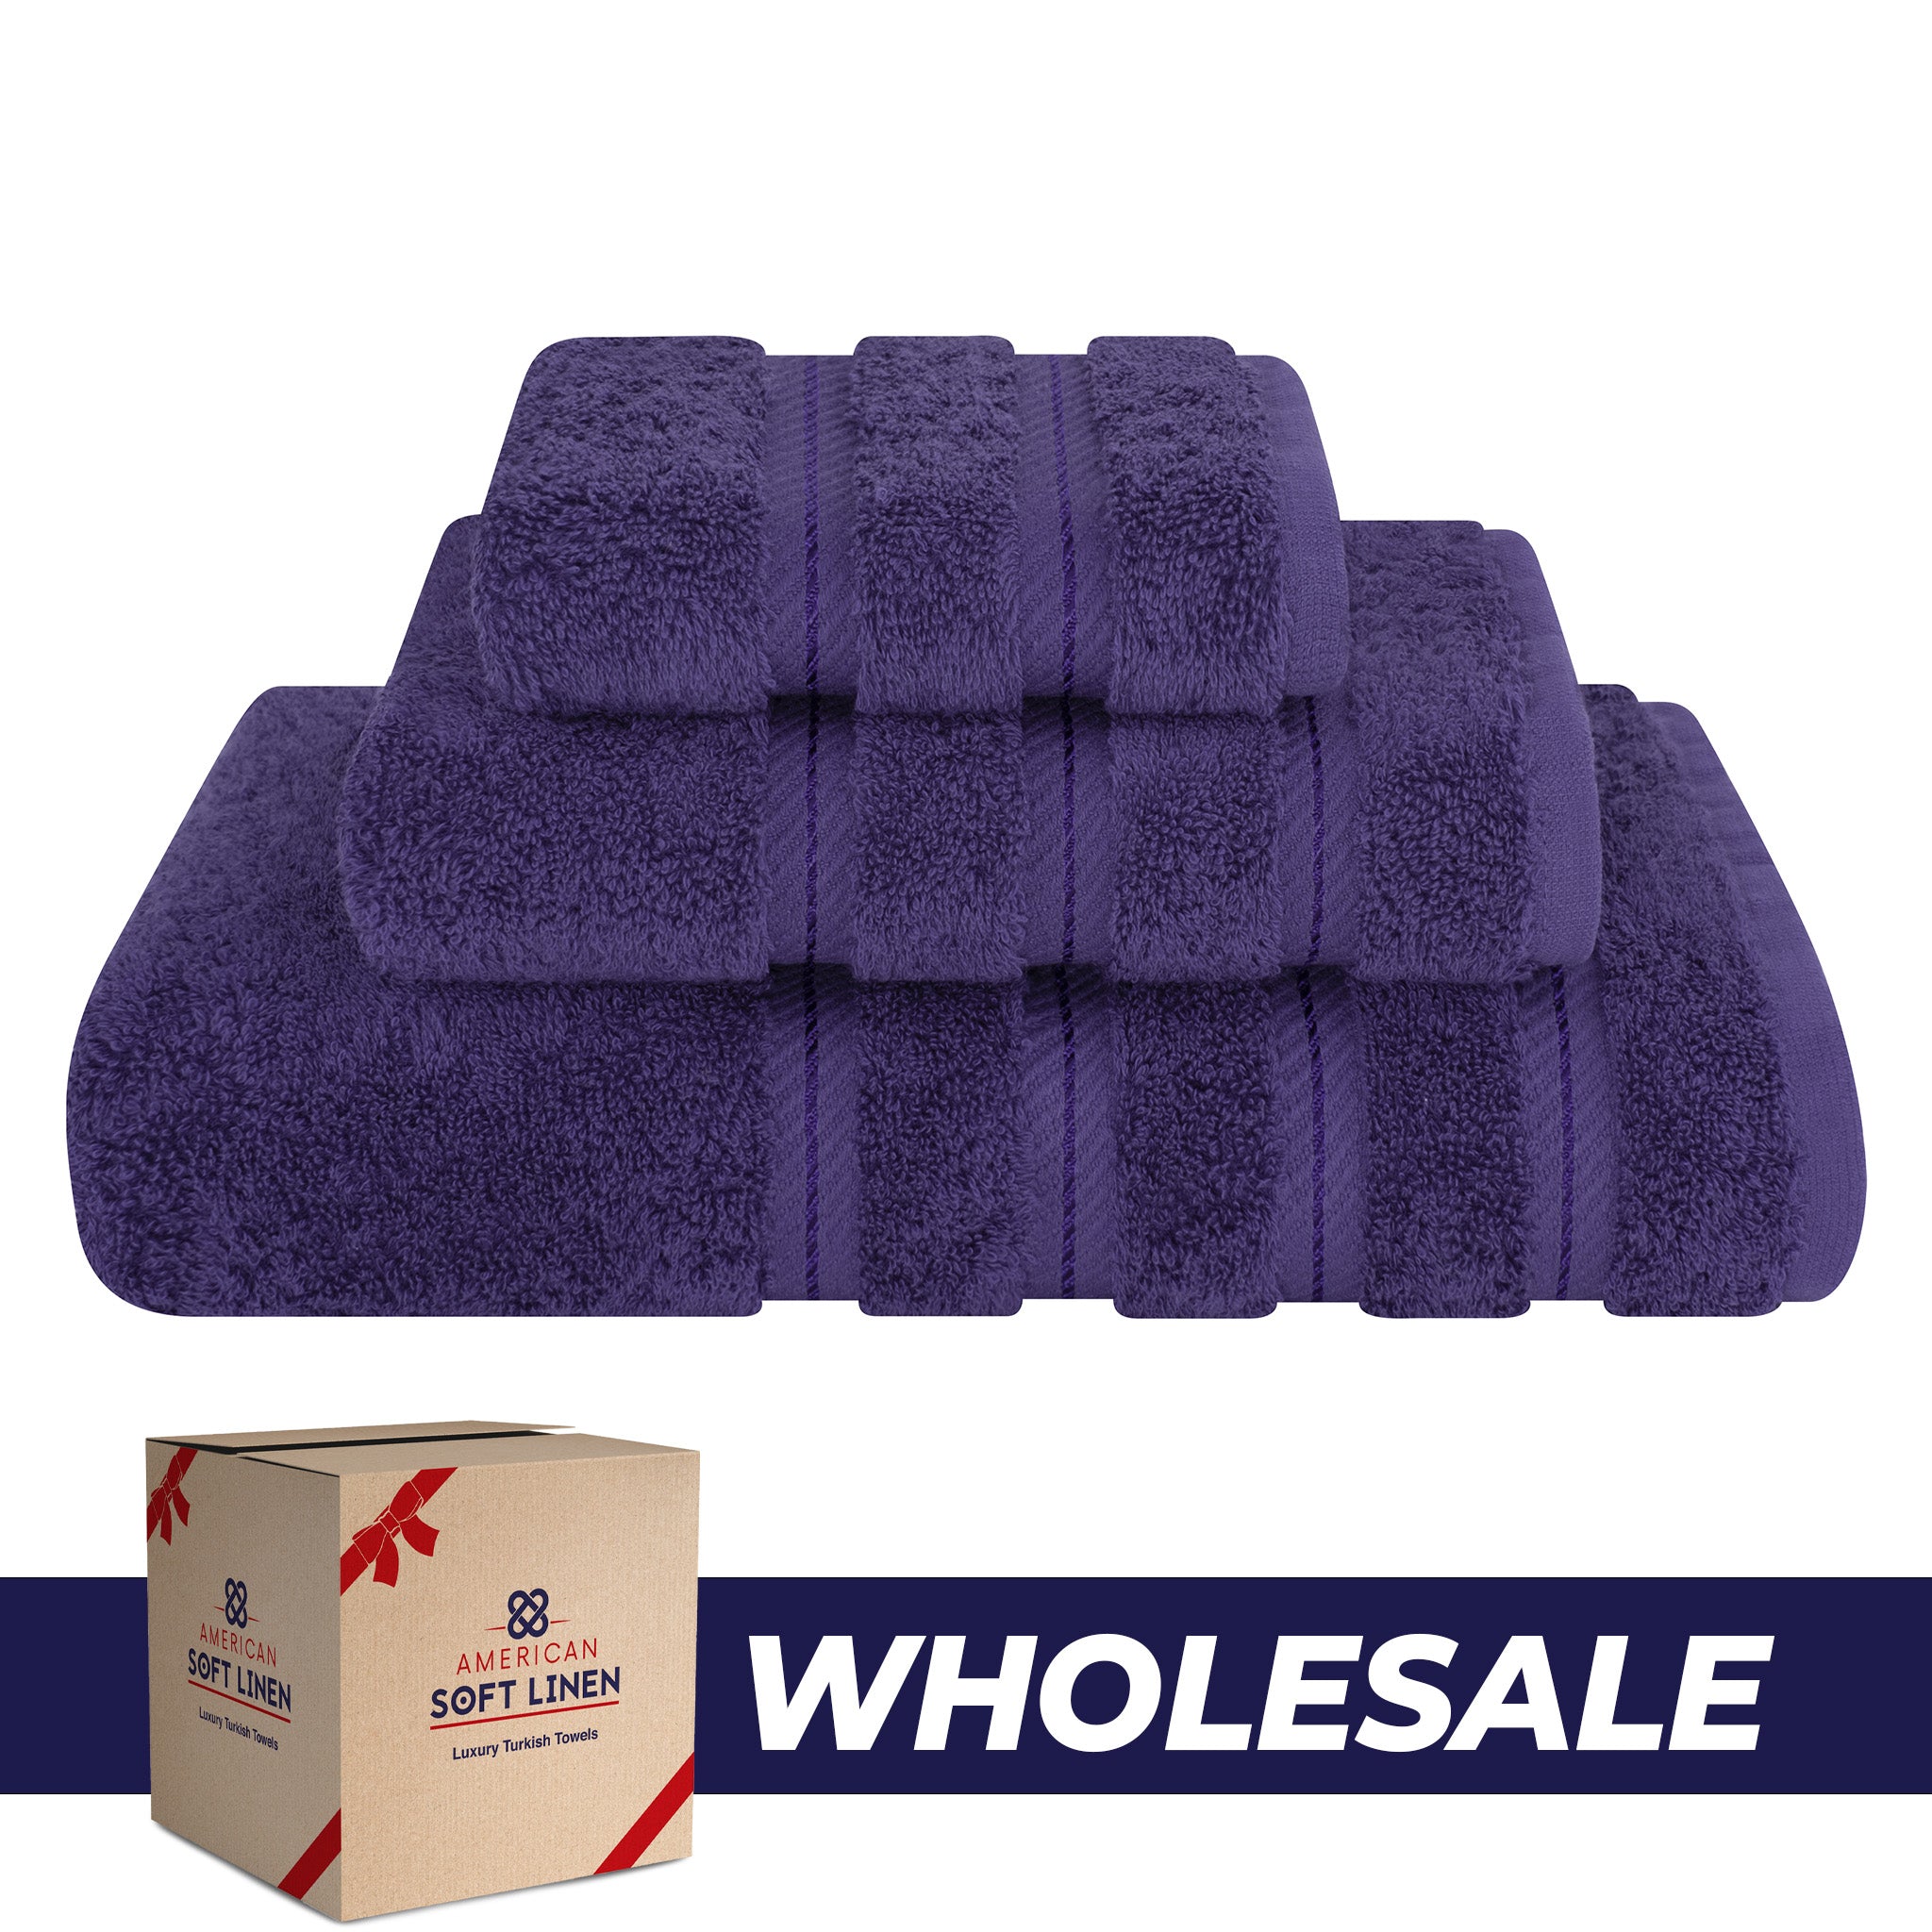 American Soft Linen 3 Piece Luxury Hotel Towel Set 20 set case pack purple-0